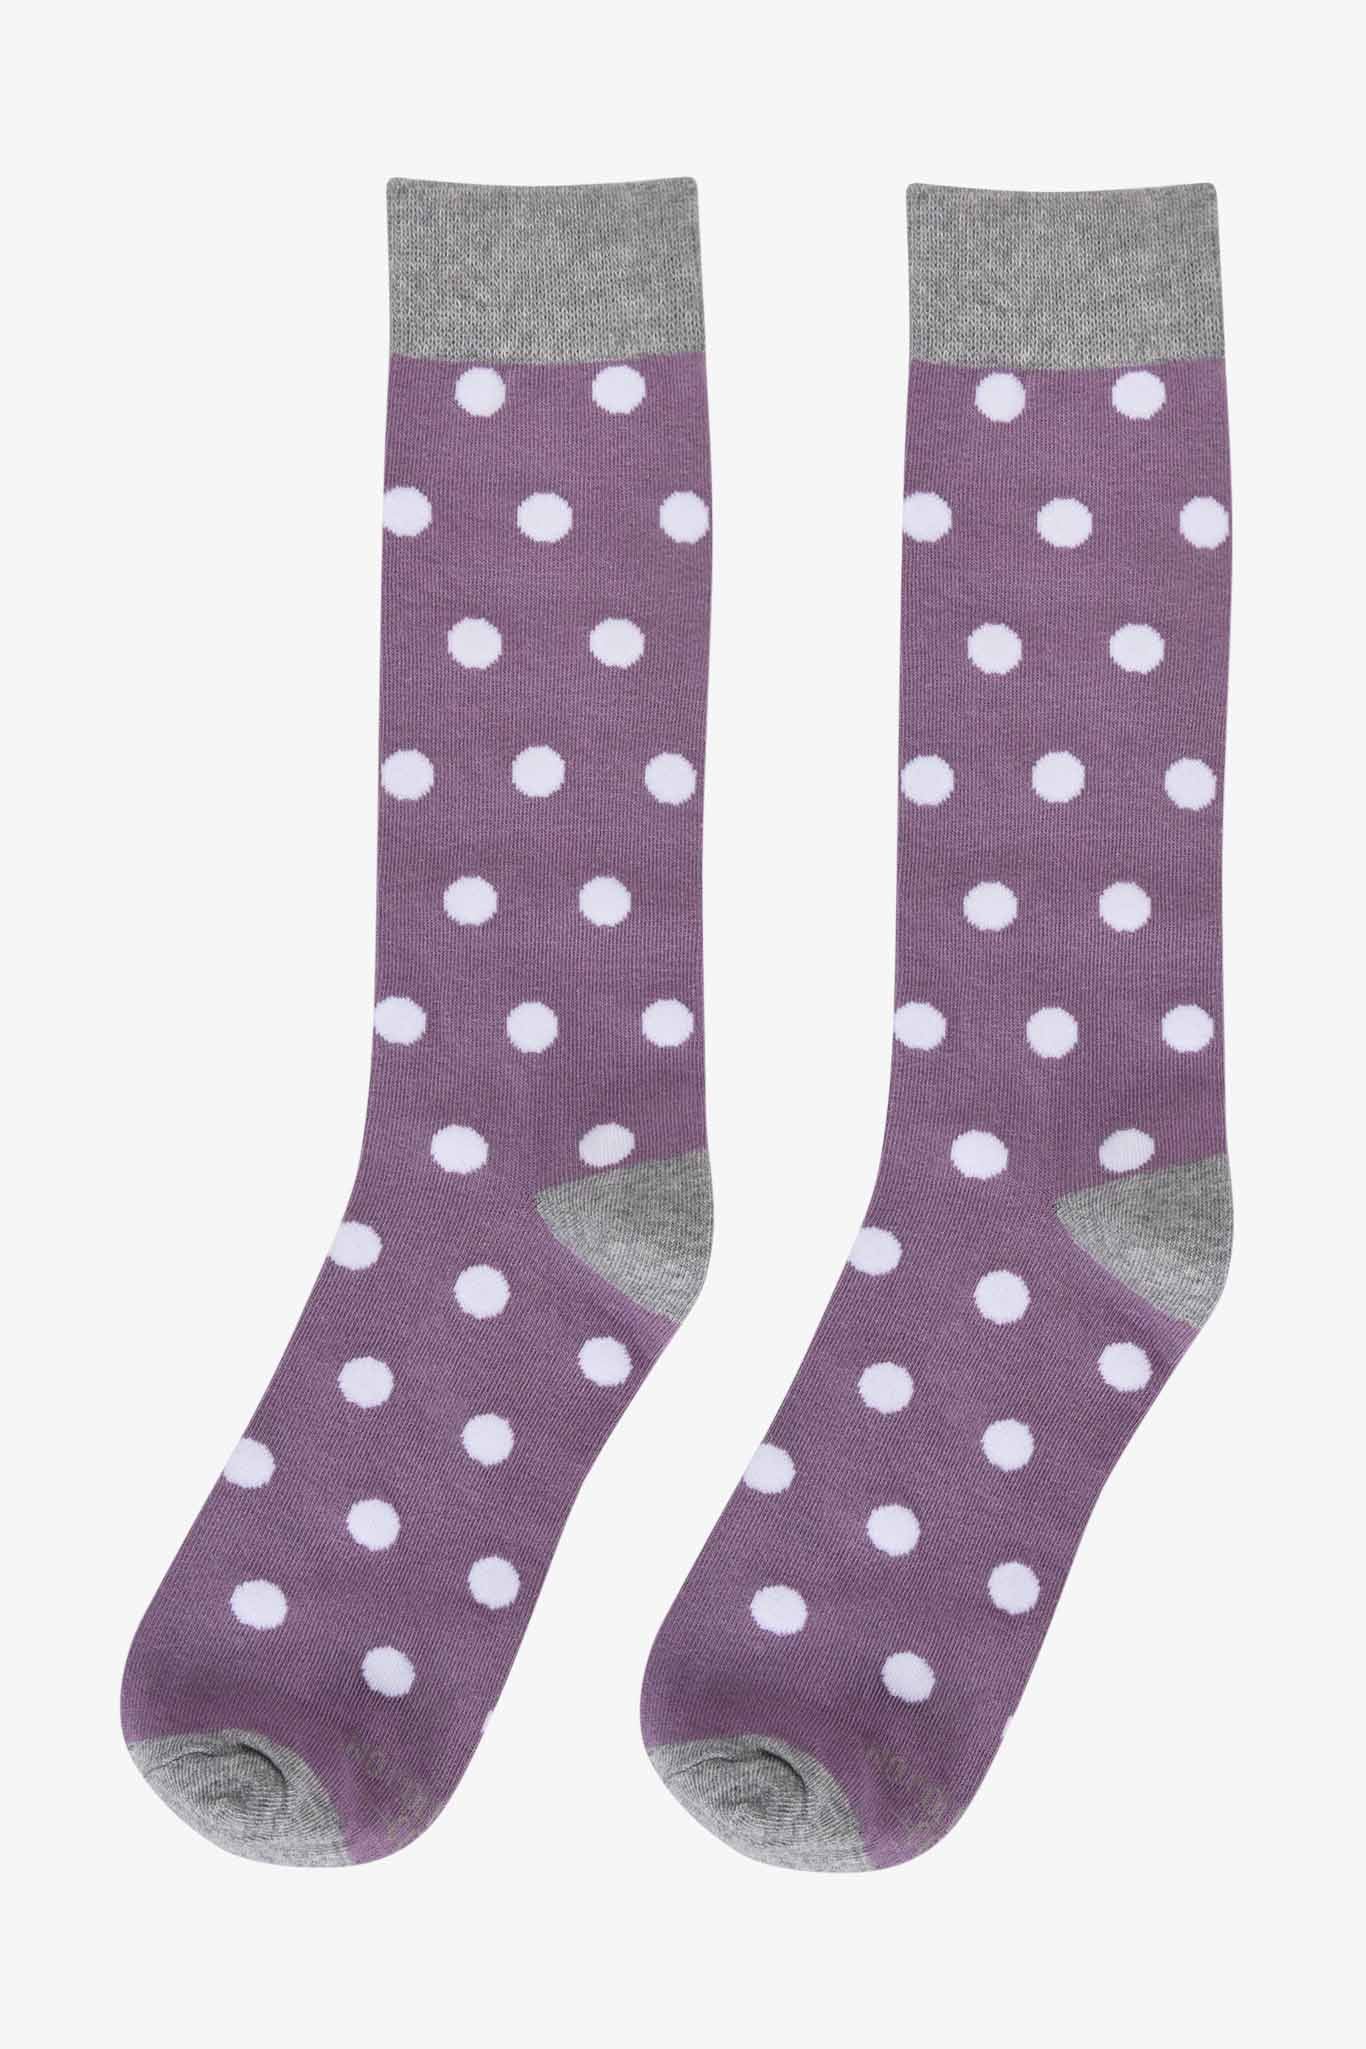 Polka Dot Groomsmen Socks By No Cold Feet - Lavender